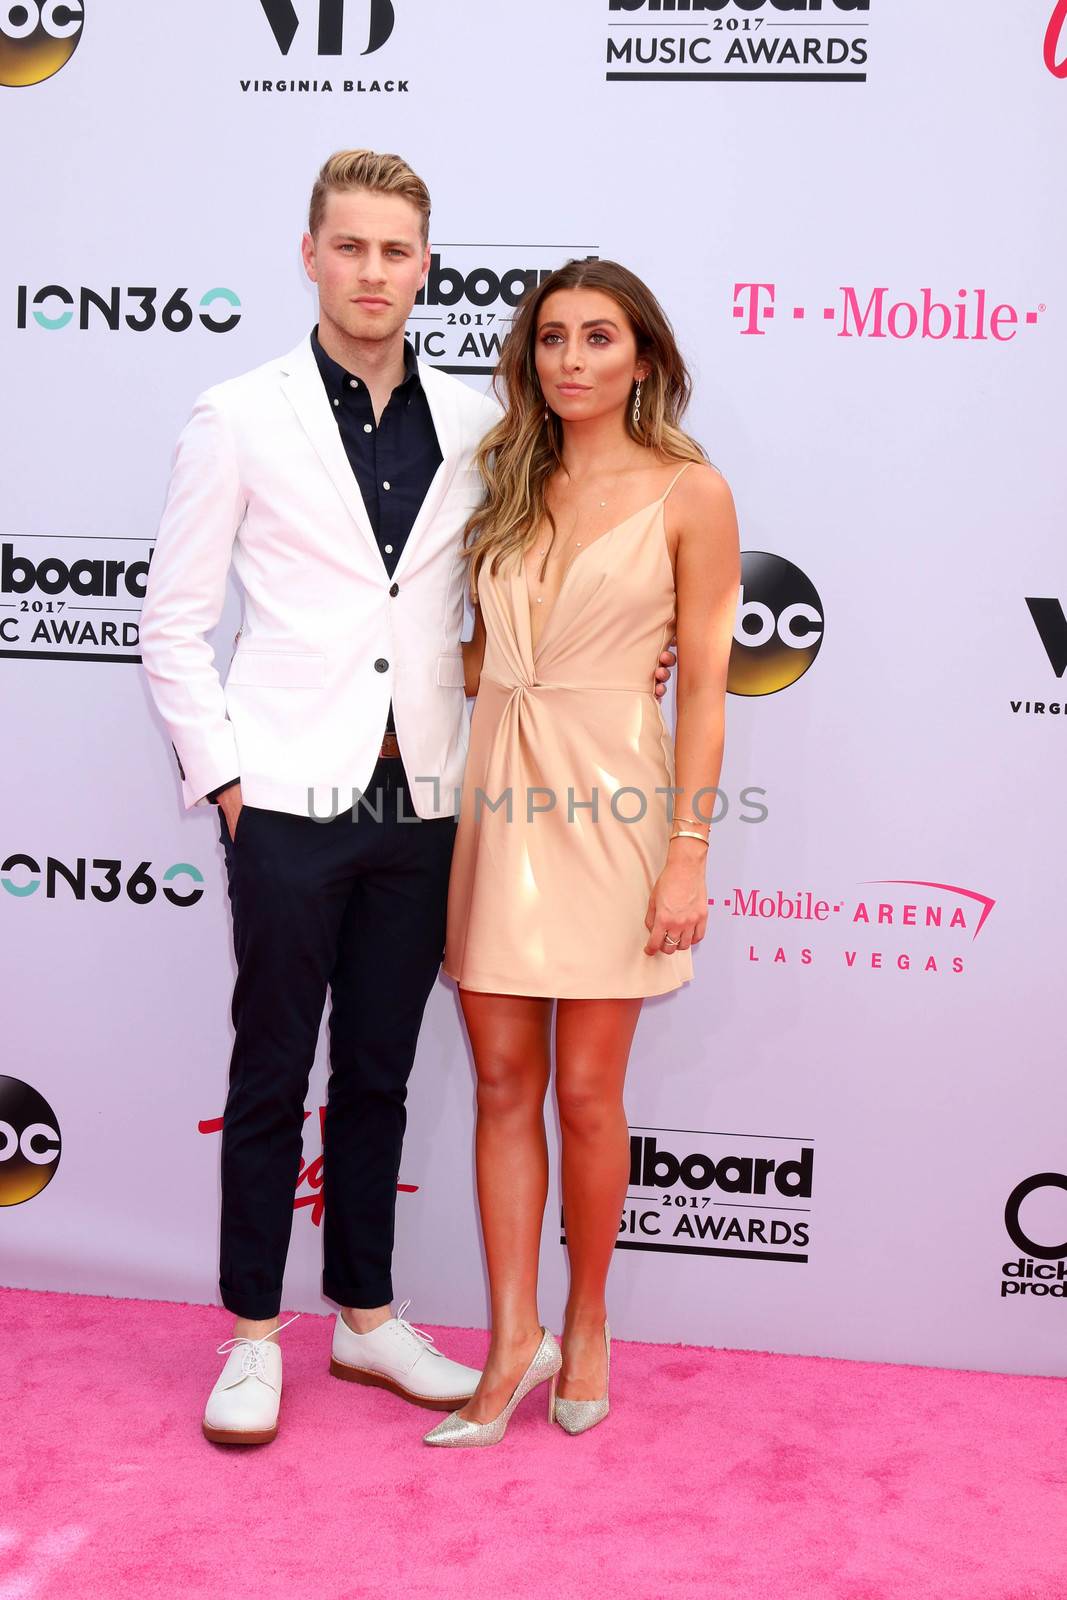 Cameron Fuller, Lauren Elizabeth
at the 2017 Billboard Awards Arrivals, T-Mobile Arena, Las Vegas, NV 05-21-17/ImageCollect by ImageCollect